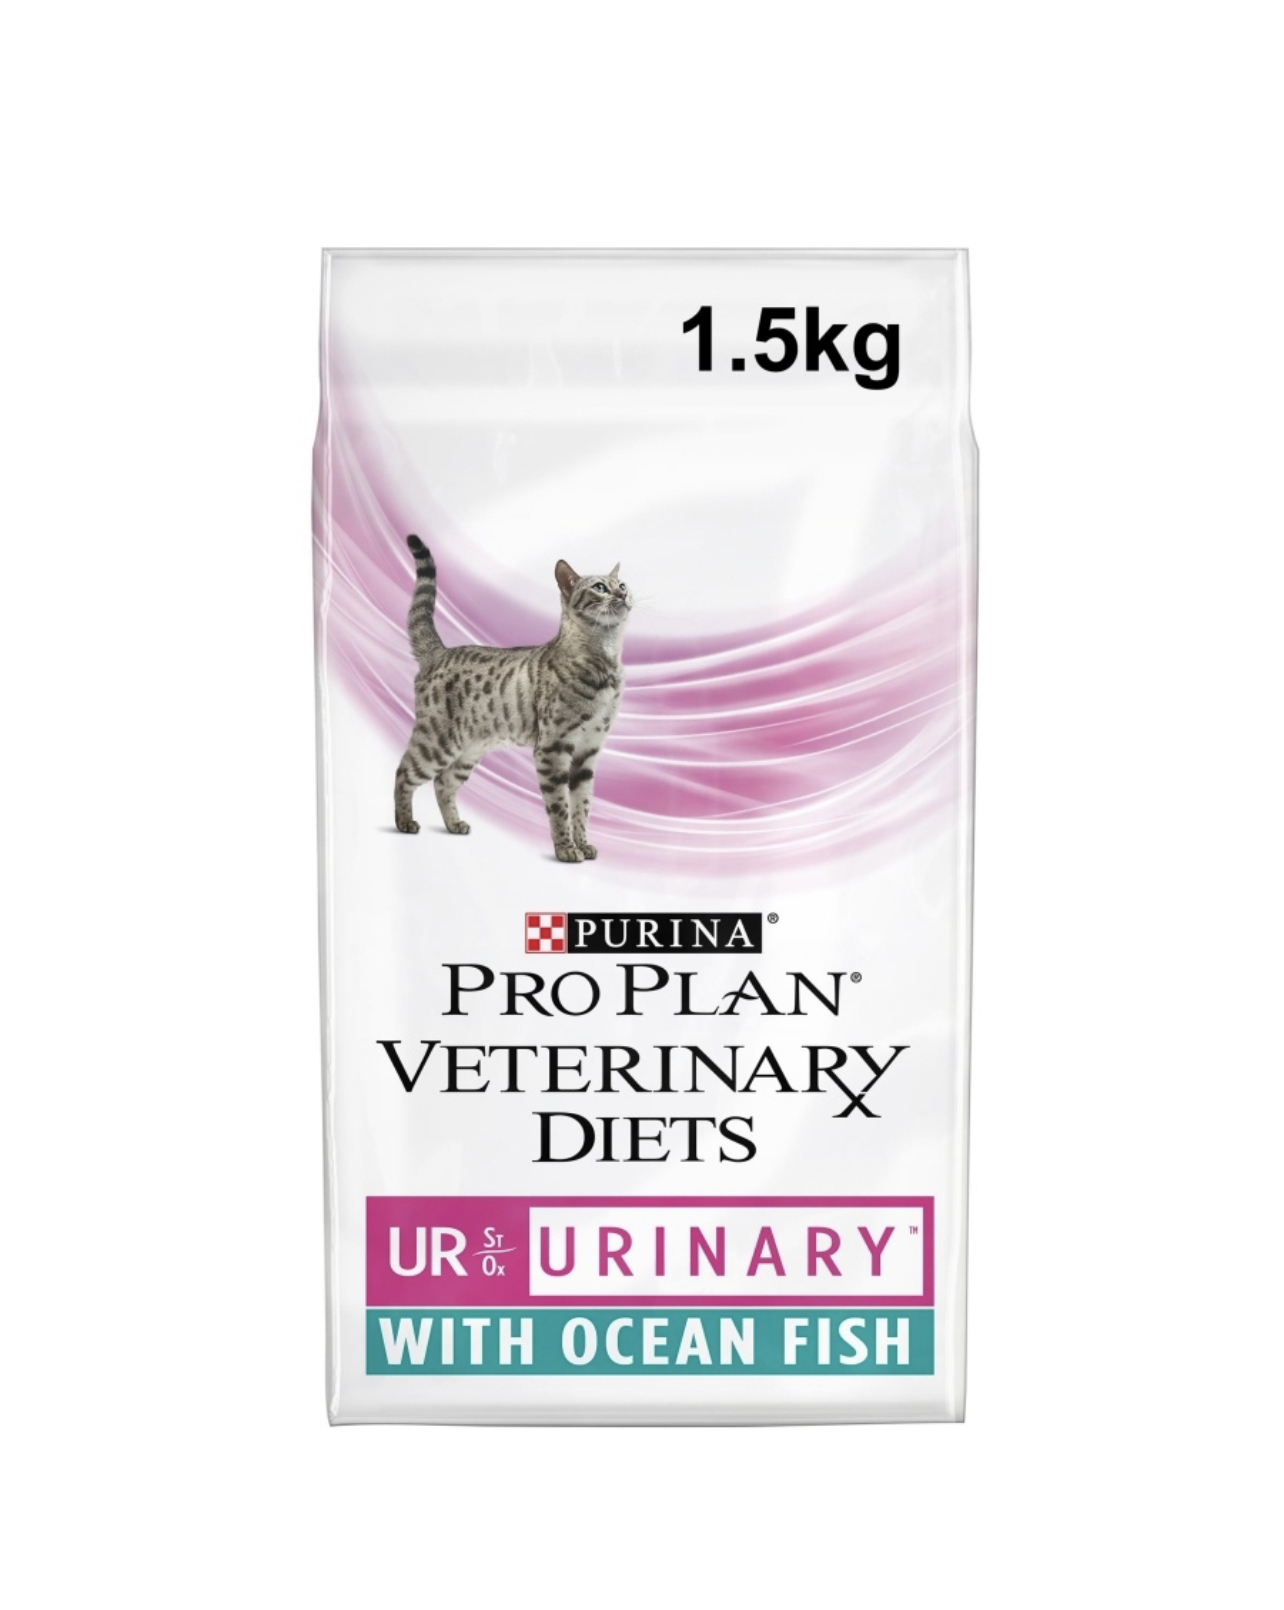 Pro plan veterinary diets цена. Pro Plan Veterinary Diets корм сухой Urinary для кошек 1.5 кг. Purina renal для кошек. Уринари Пурина Проплан 1.5 кг. Pro Plan renal function для кошек 1.5 кг.